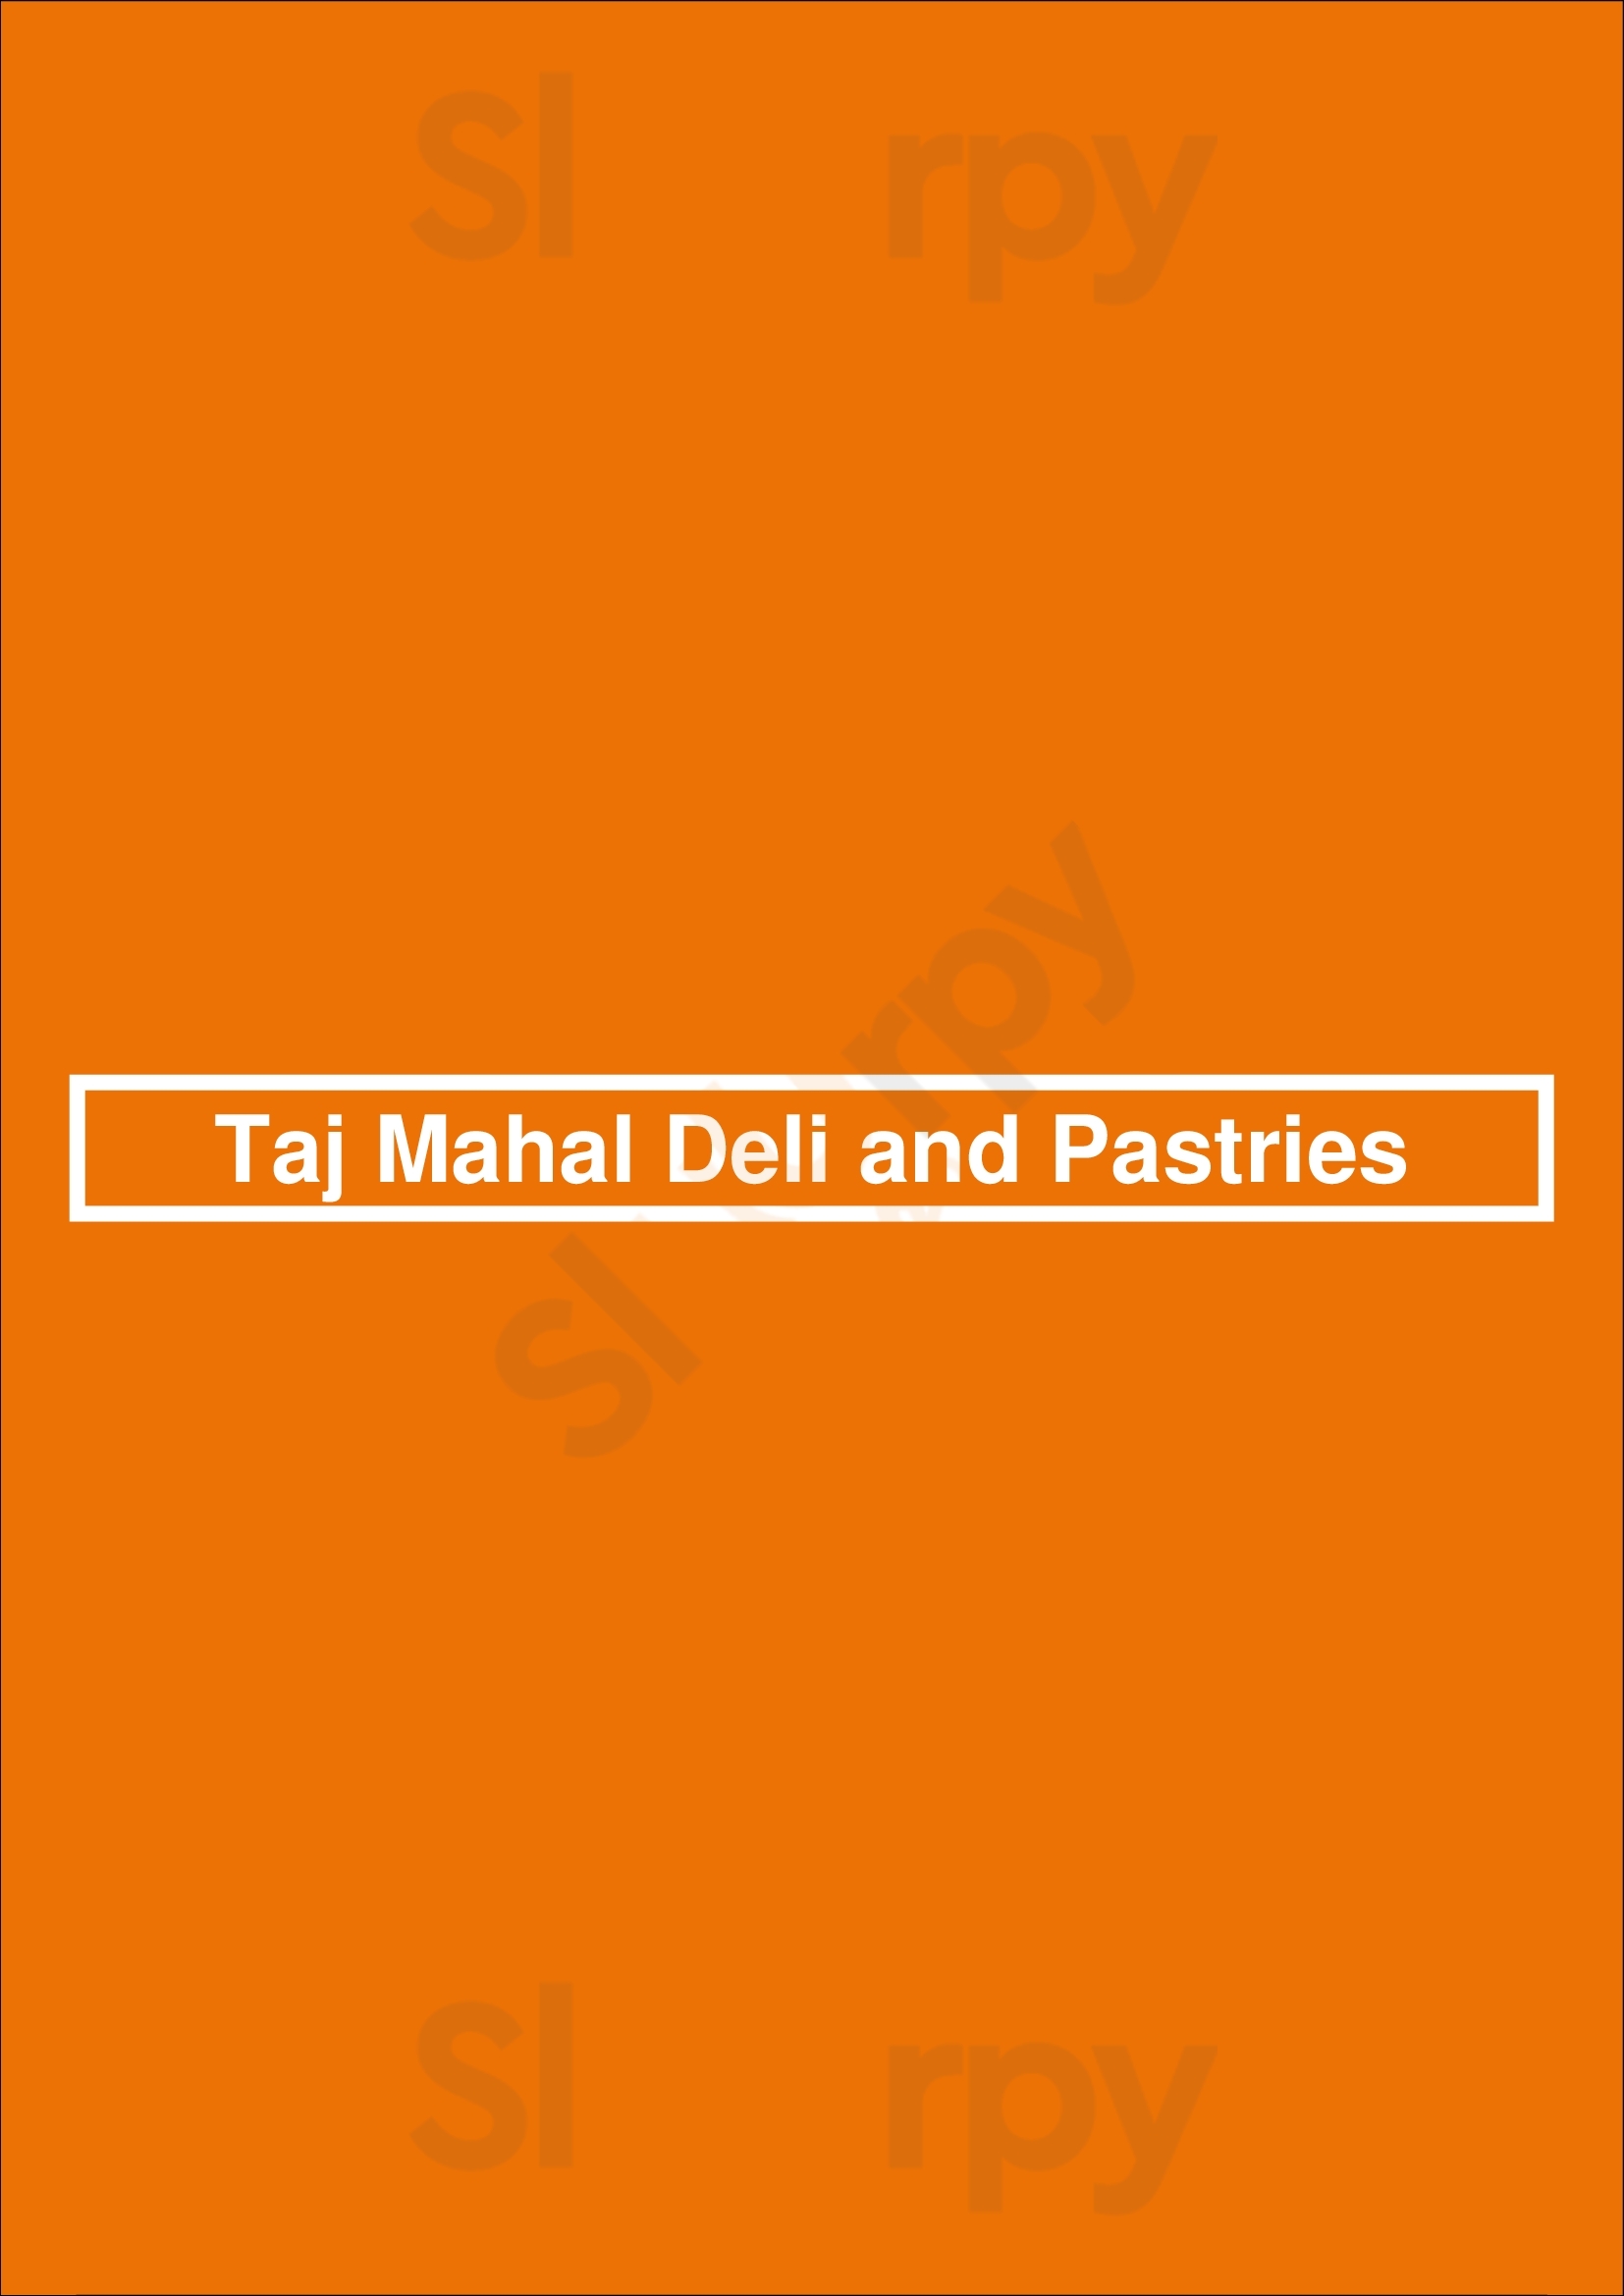 Taj Mahal Deli And Pastries Miami Beach Menu - 1